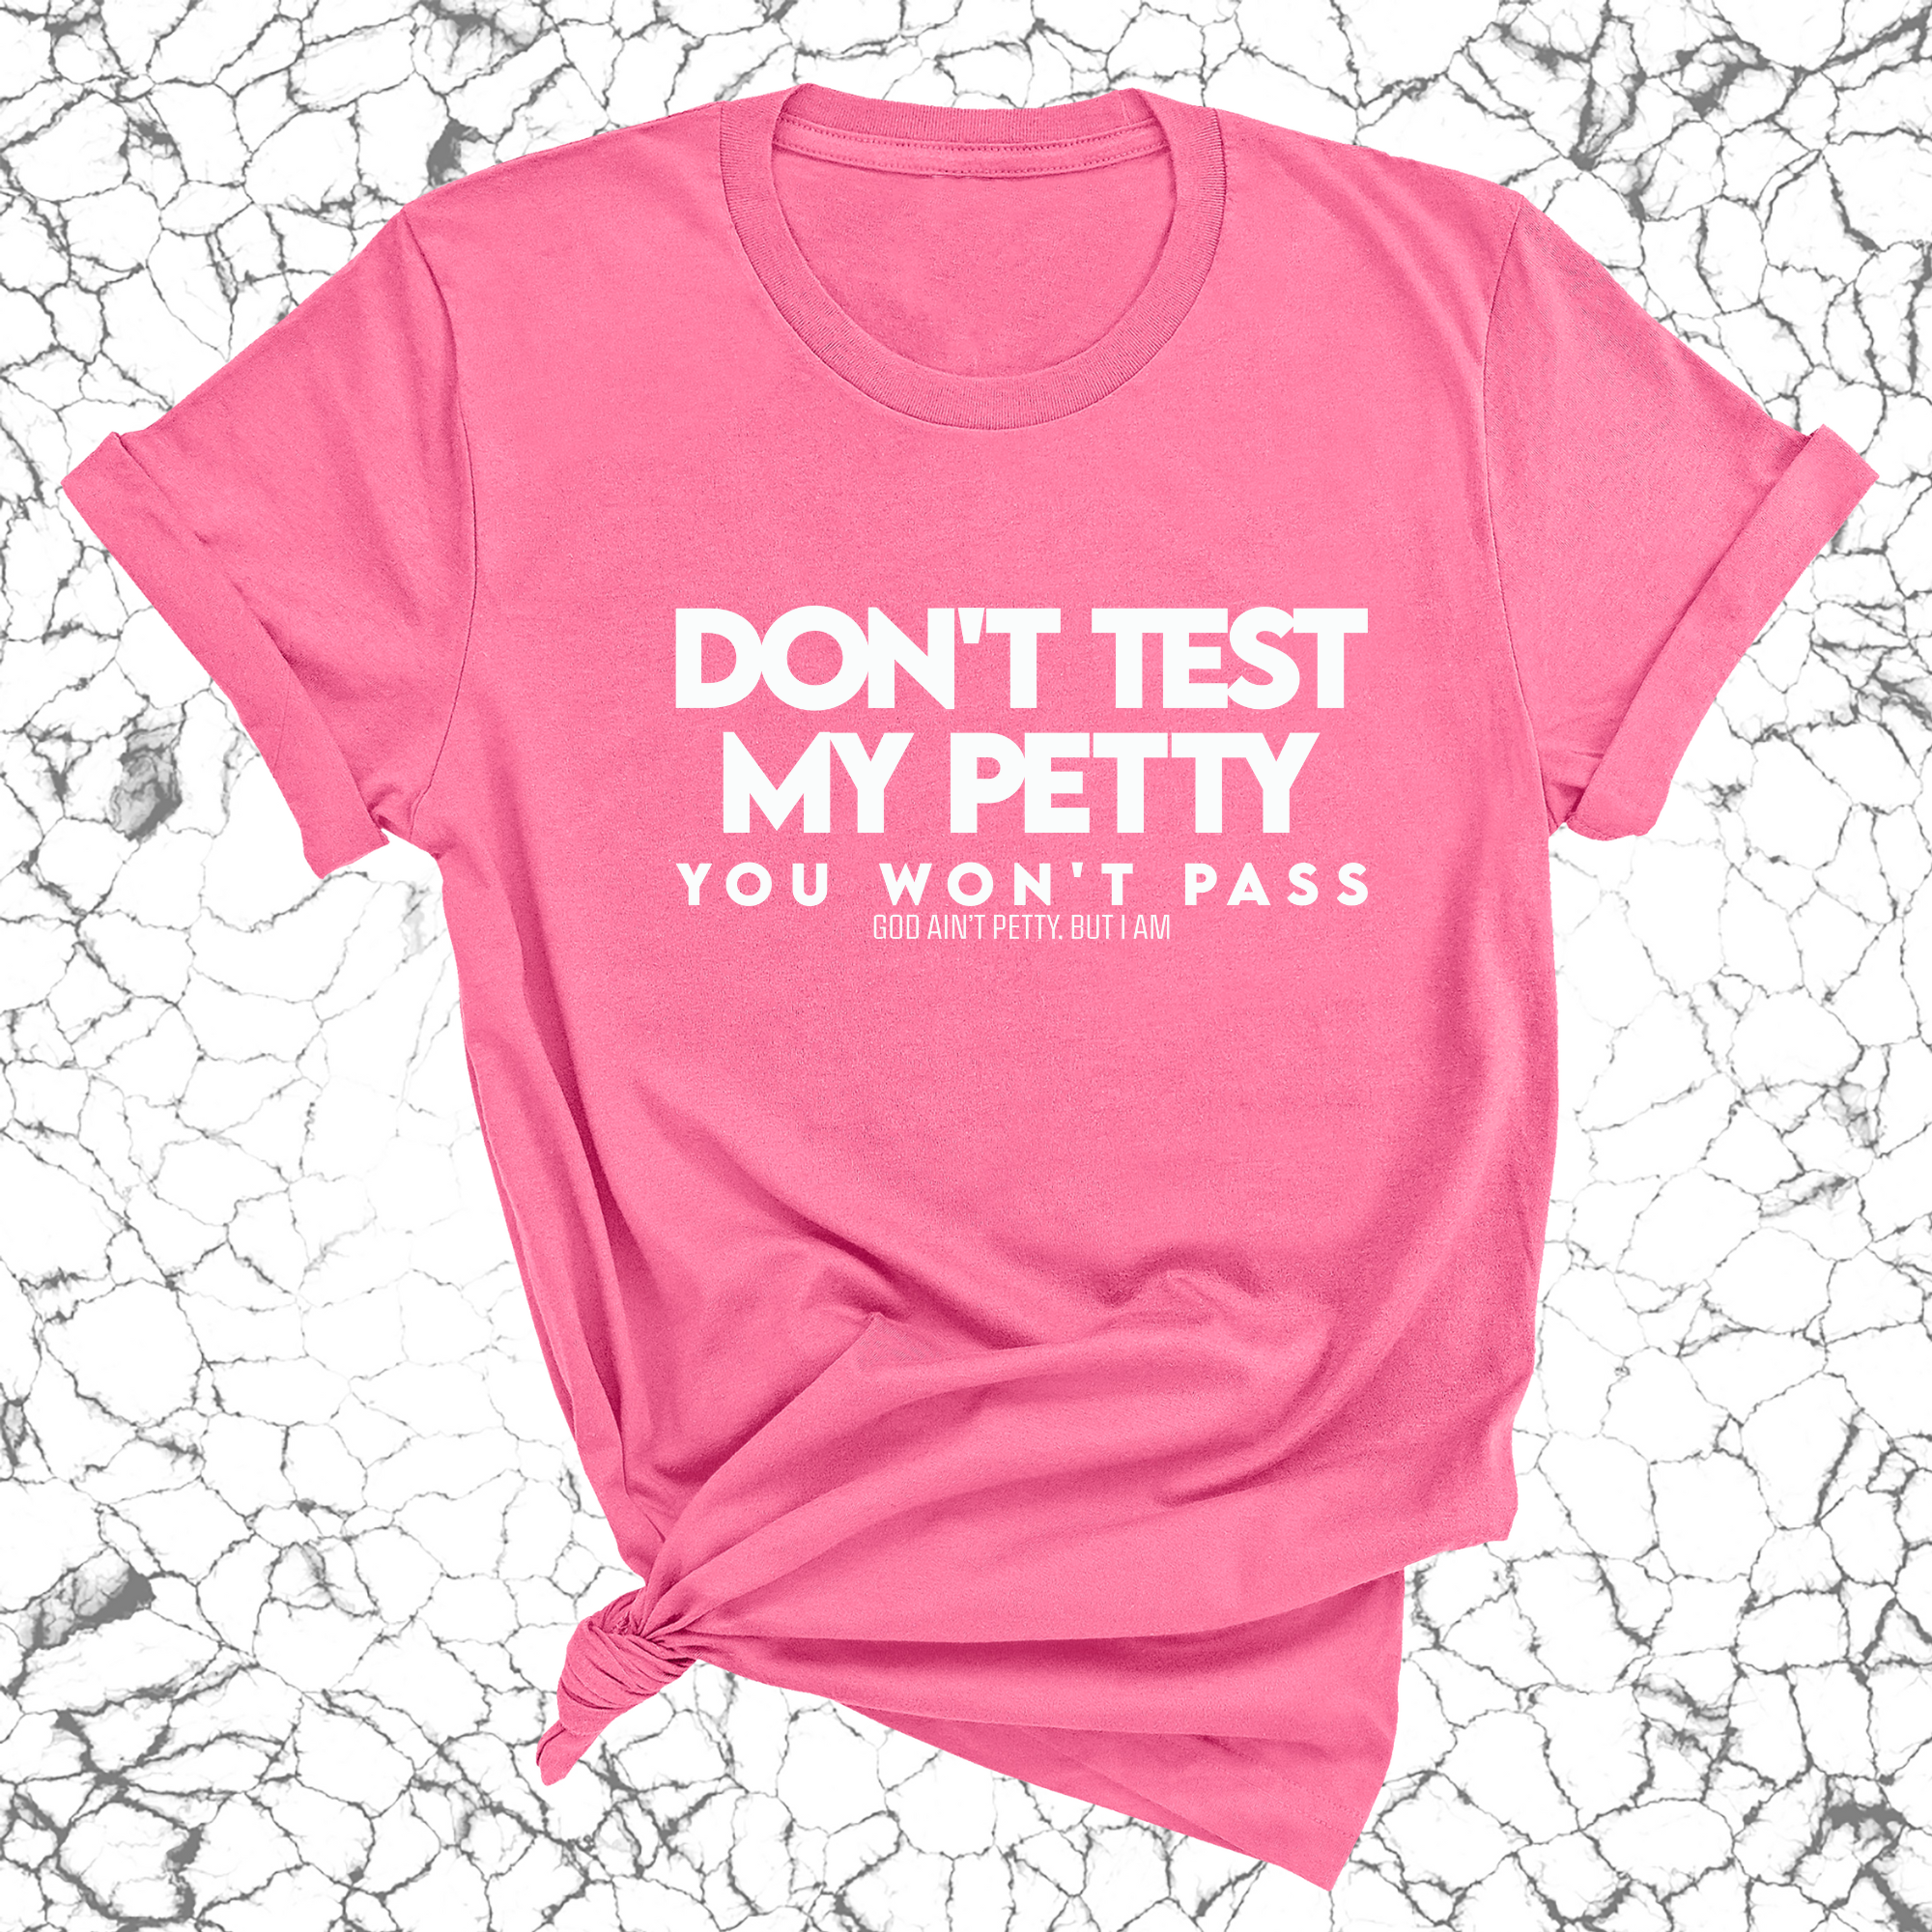 Don't Test my Petty You won't Pass Unisex Tee-T-Shirt-The Original God Ain't Petty But I Am